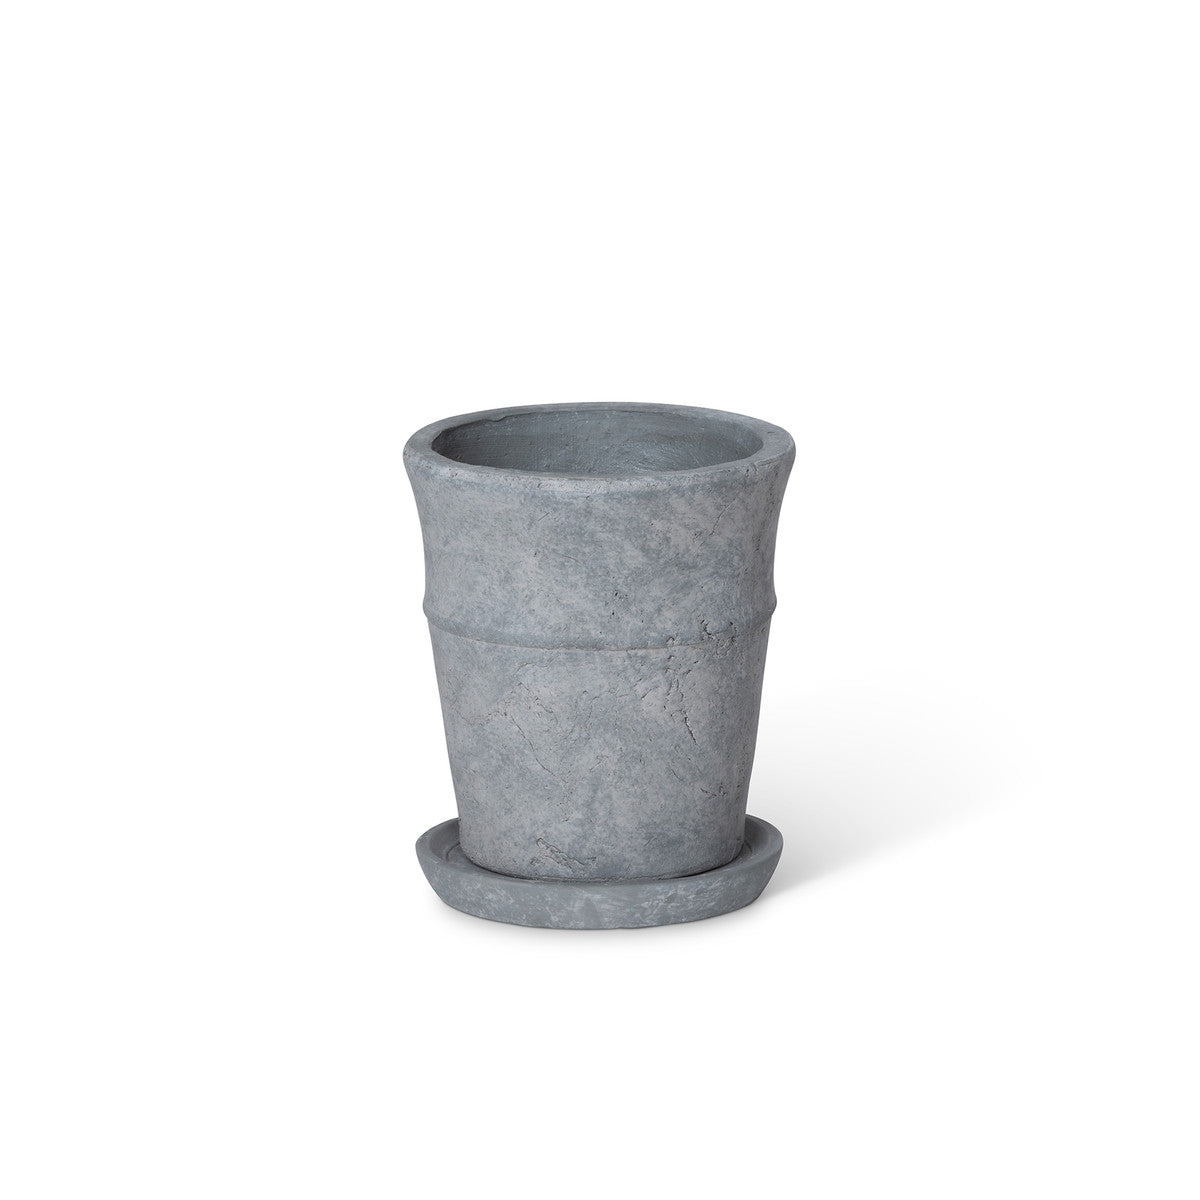 Meyer Cement Garden Pot w/ Tray - 5.5"